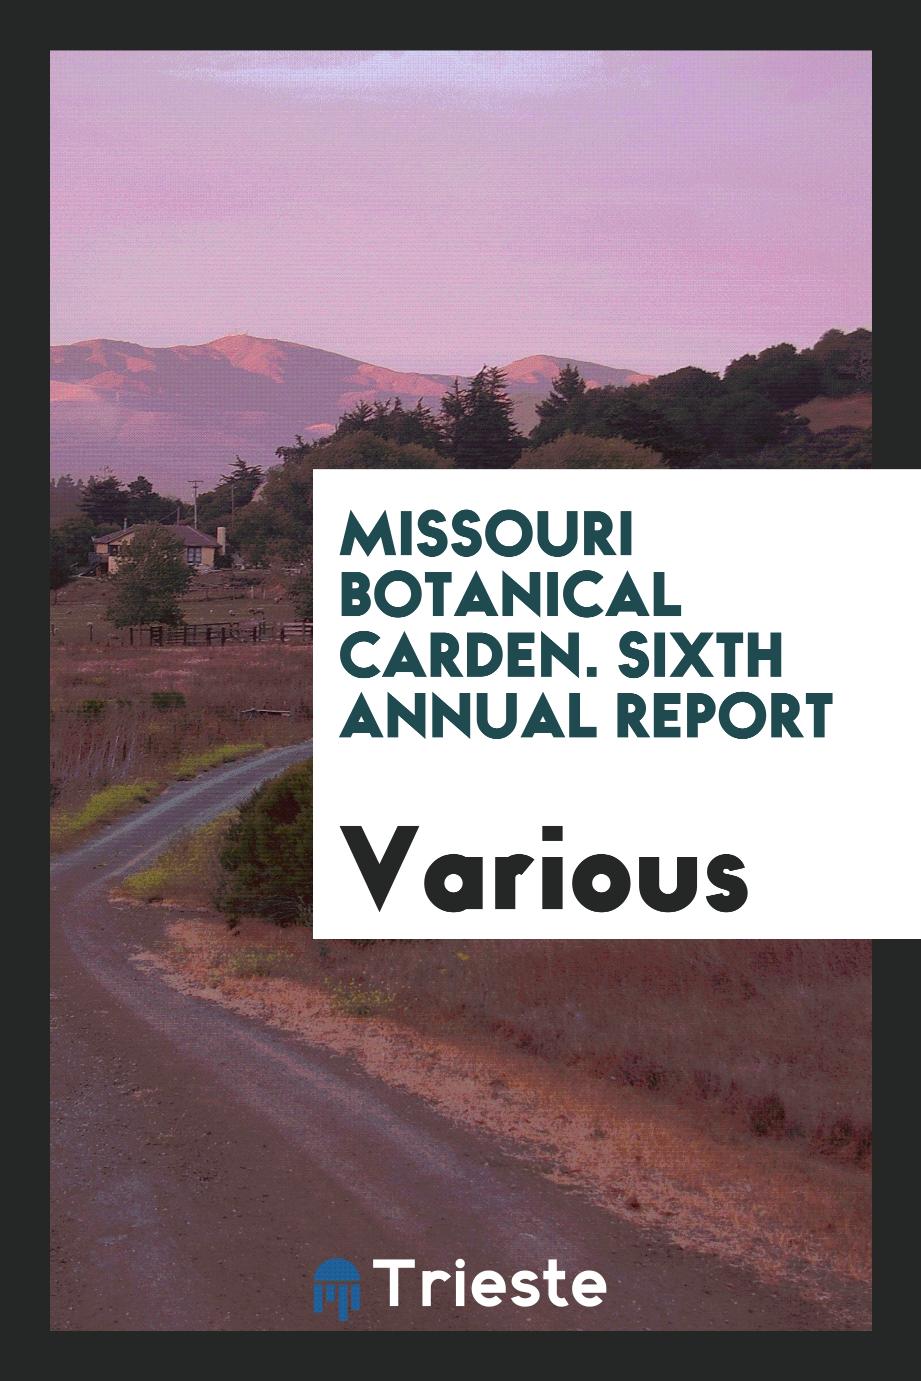 Missouri botanical carden. Sixth annual report